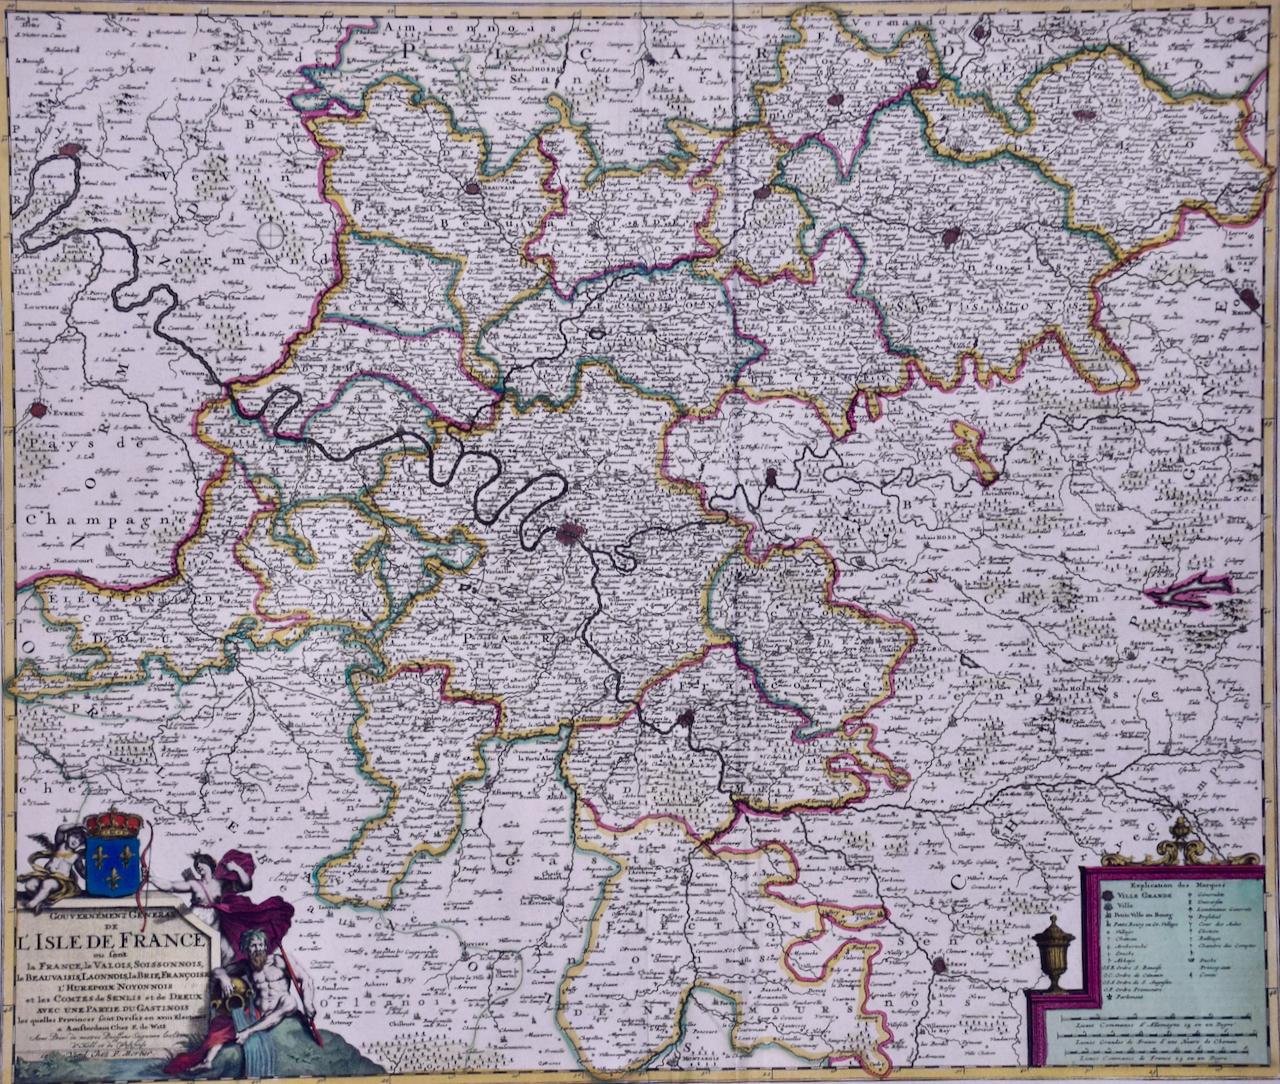 L'Isle de France: A Hand-colored 17th Century Map by De Wit  - Print by Frederick de Wit